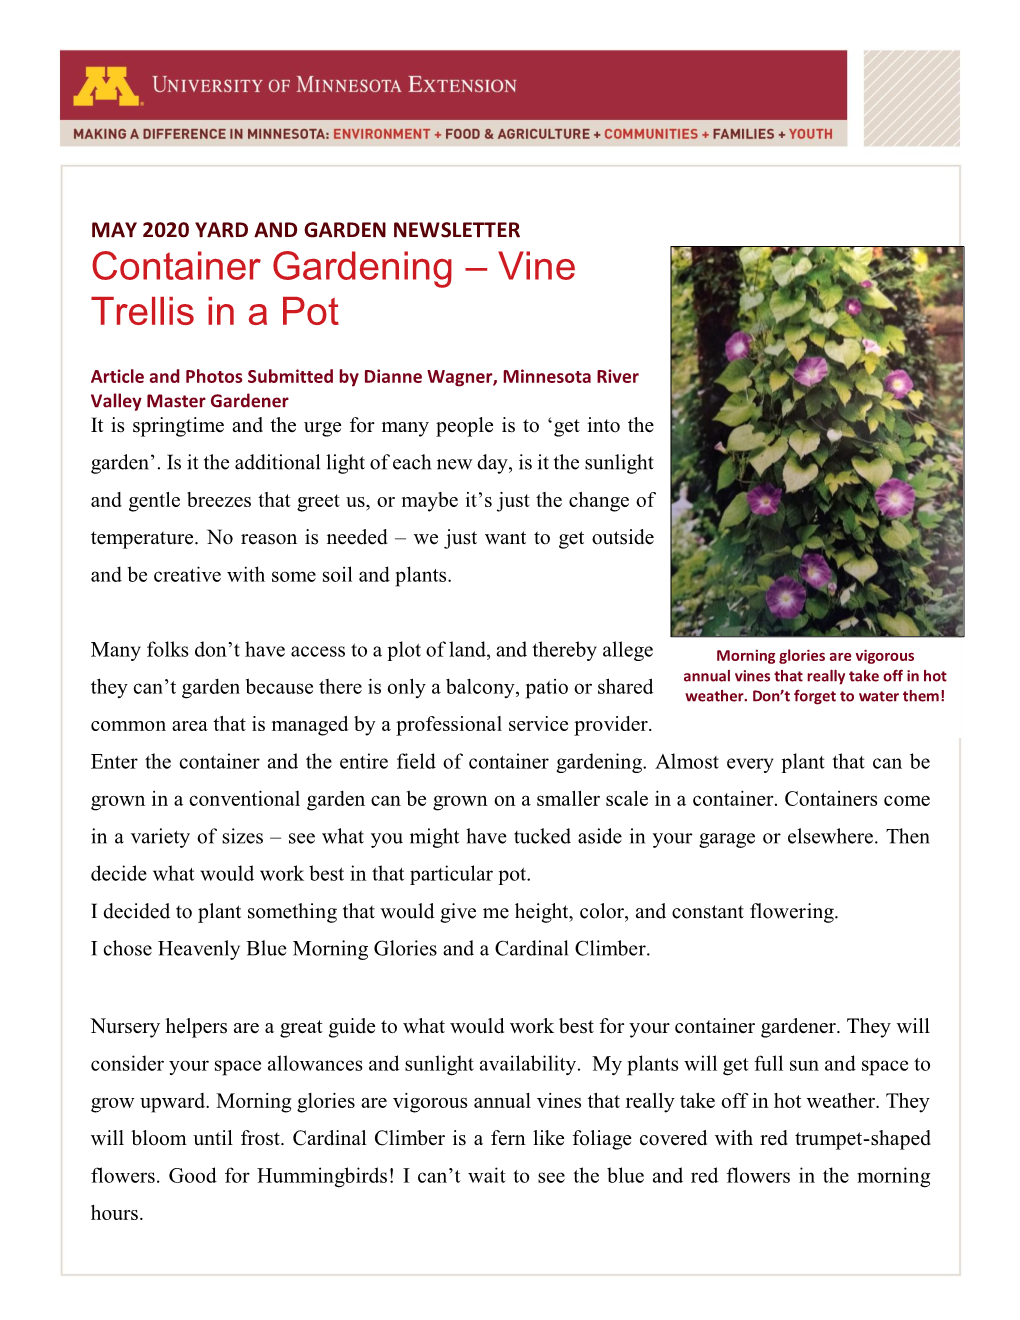 Container Gardening – Vine Trellis in a Pot